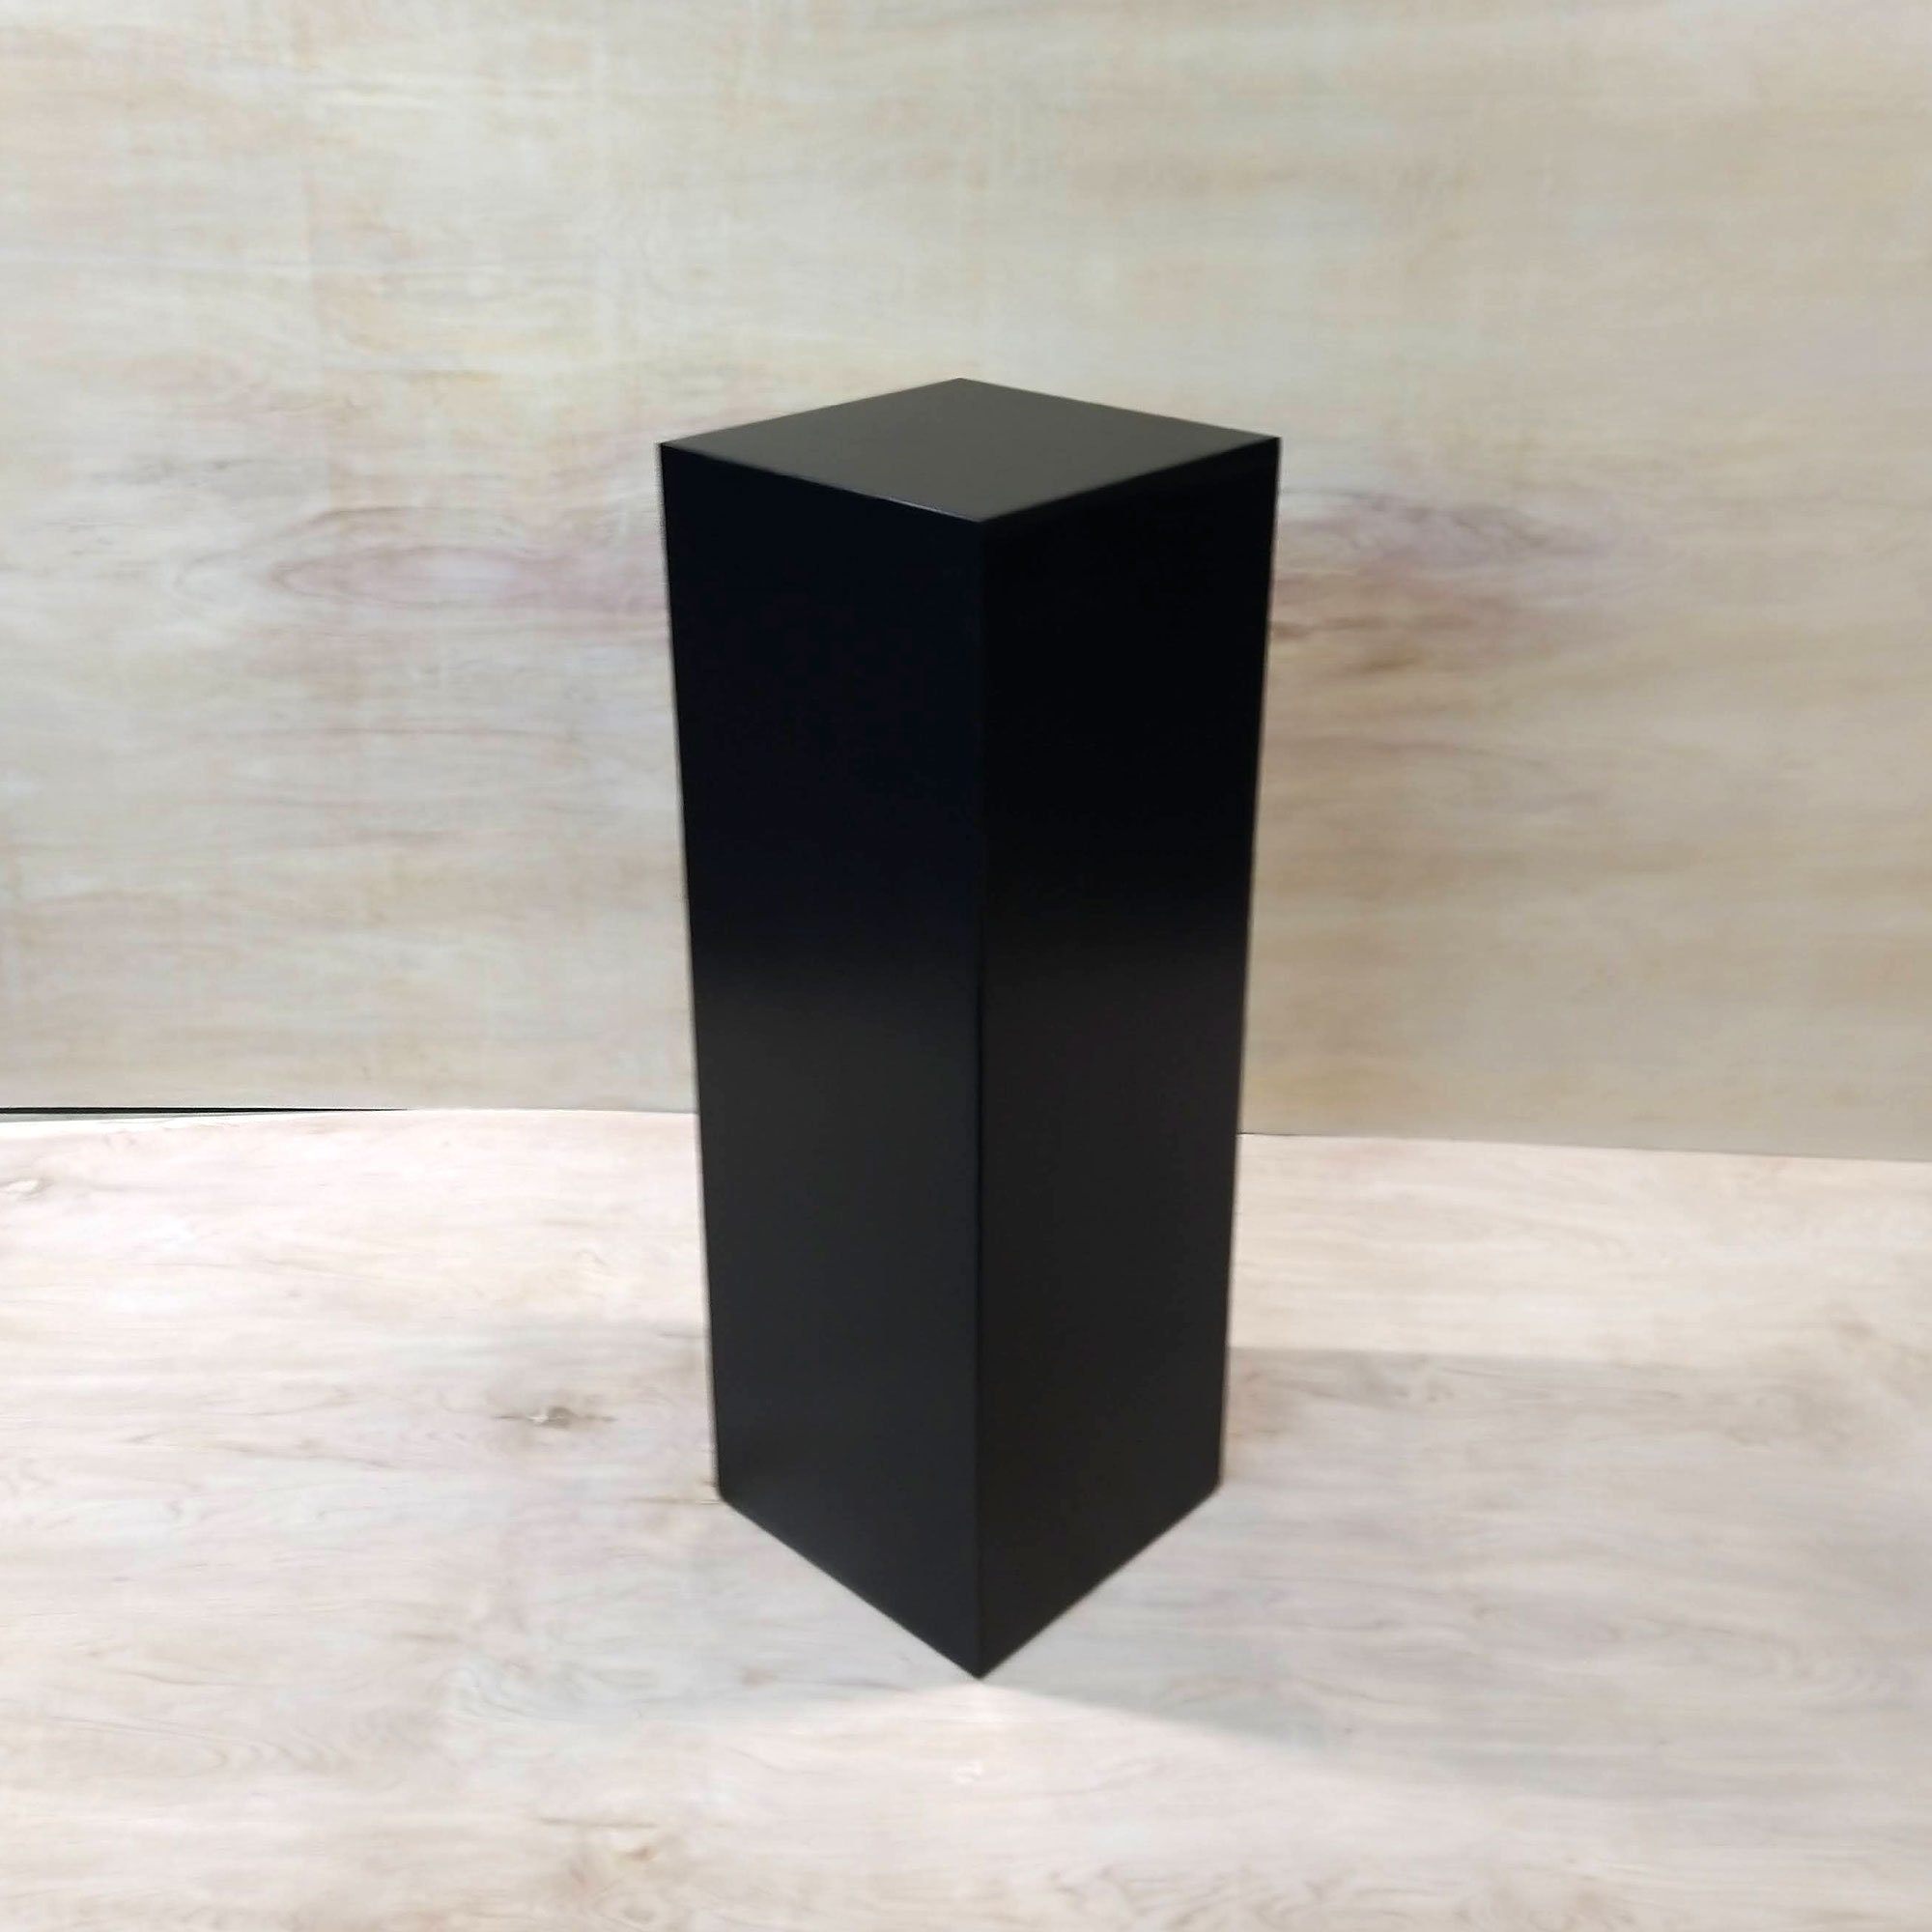 42 X 12 X 12 Black Display Pedestal Stand Riser Column Pillar Plinth 